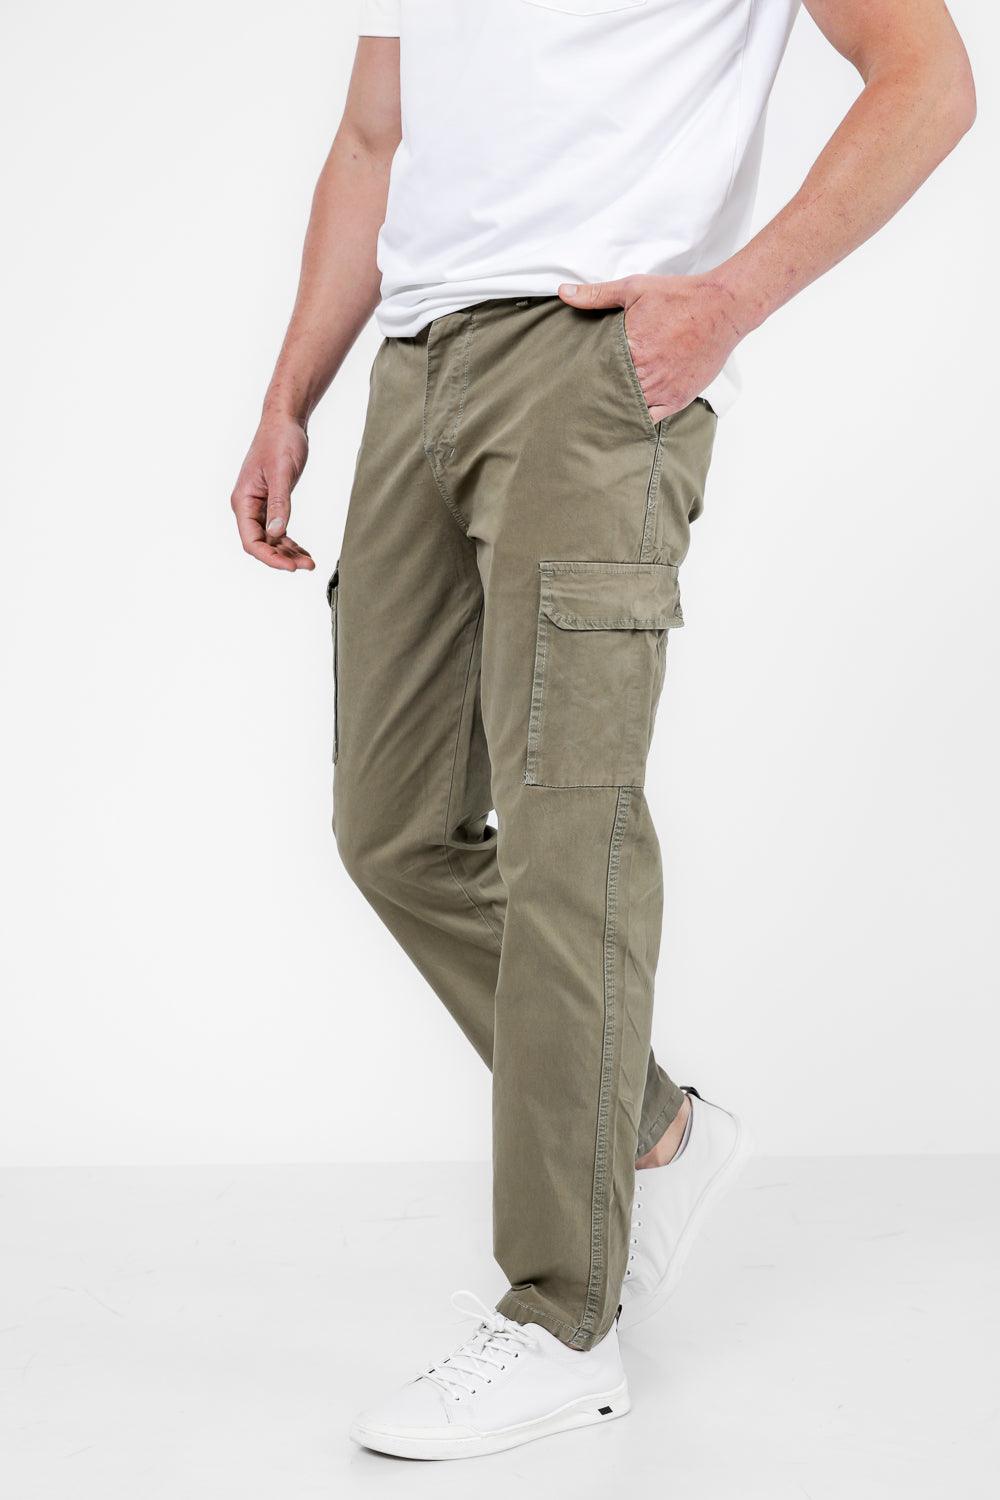 SCORCHER - מכנסי דגמ"ח CLASSIC בצבע ירוק זית - MASHBIR//365